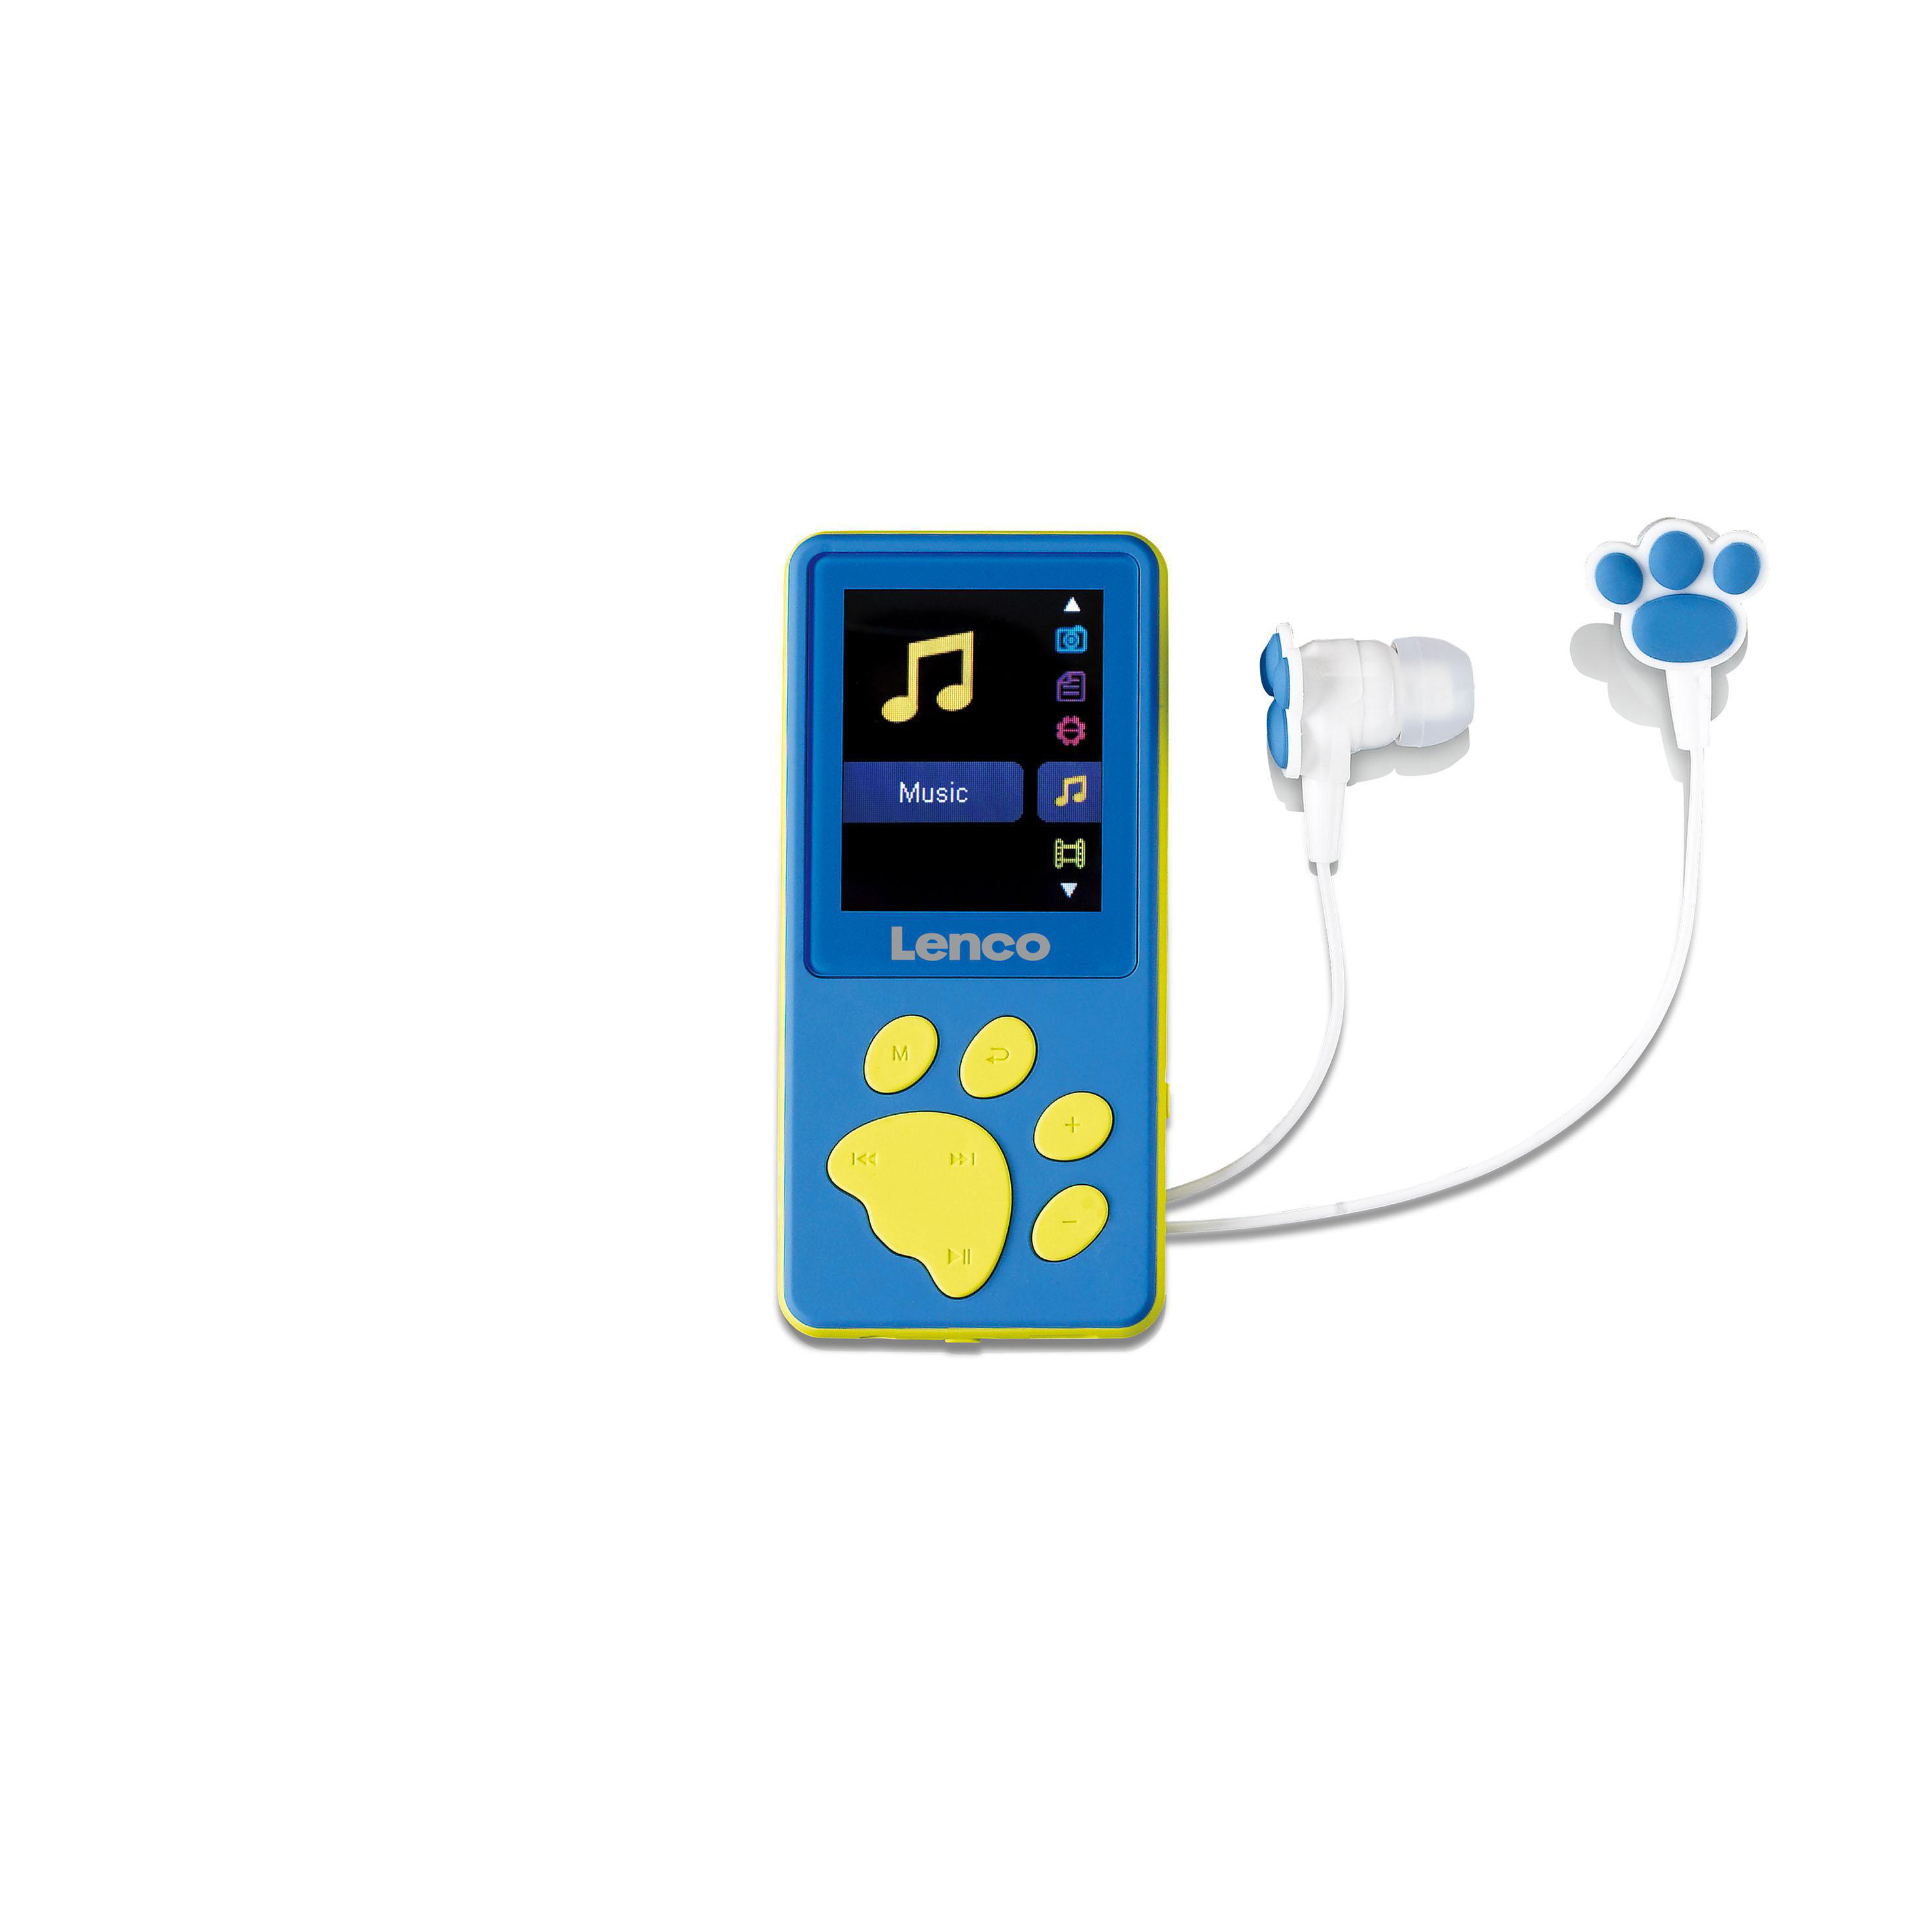 LENCO Blau Player MP3 Xemio-560 GB, 8